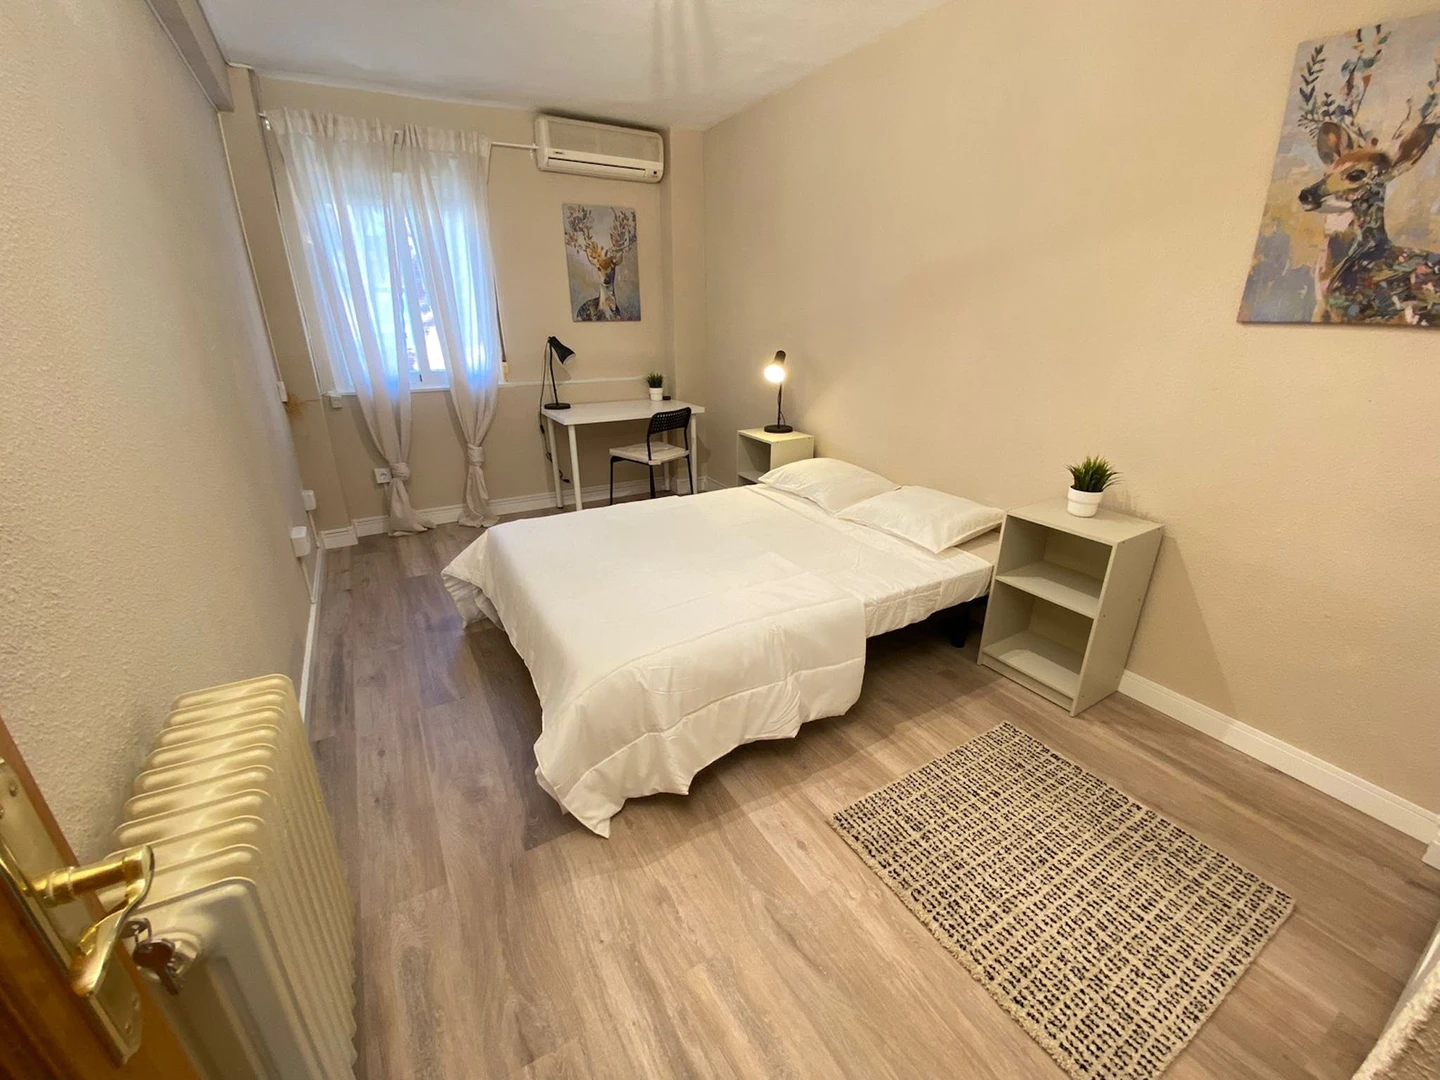 Cheap private room in Fuenlabrada